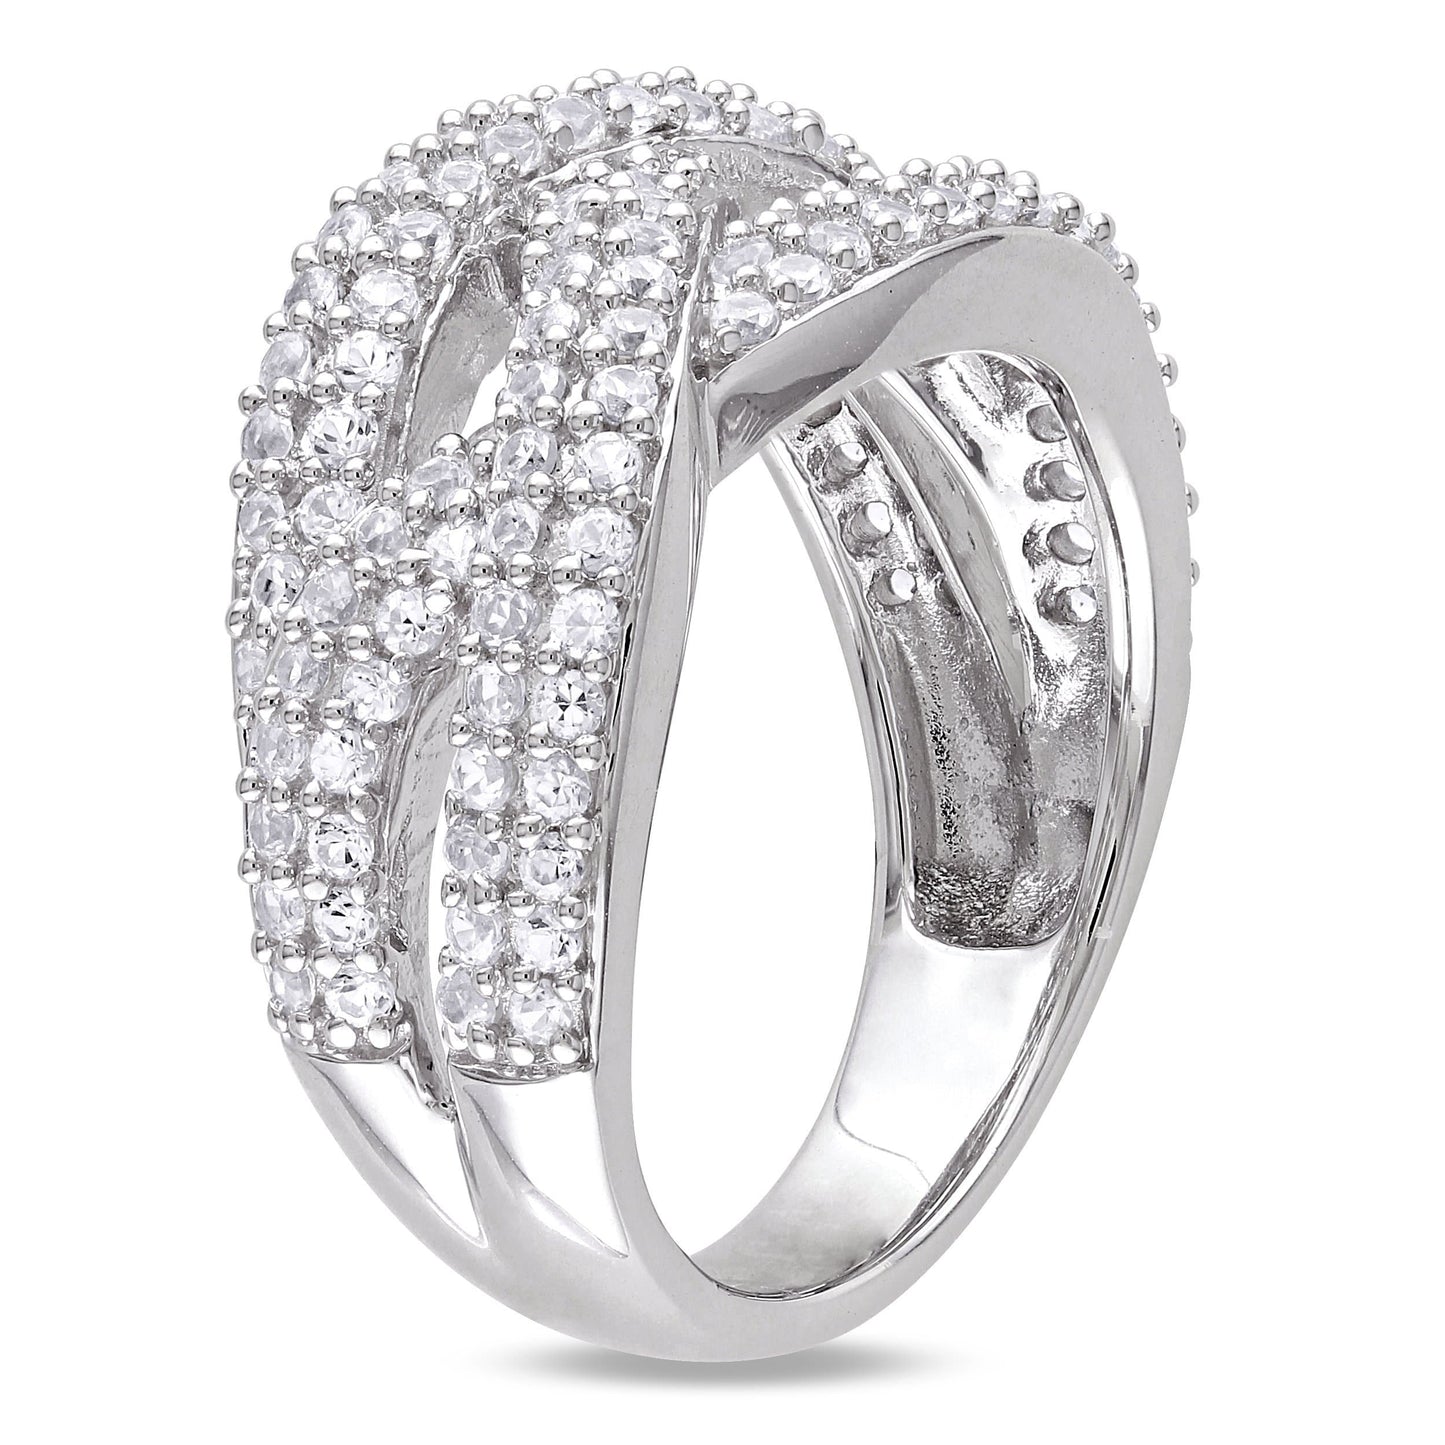 Sophia B 1 1/4ct Created White Sapphire Ring